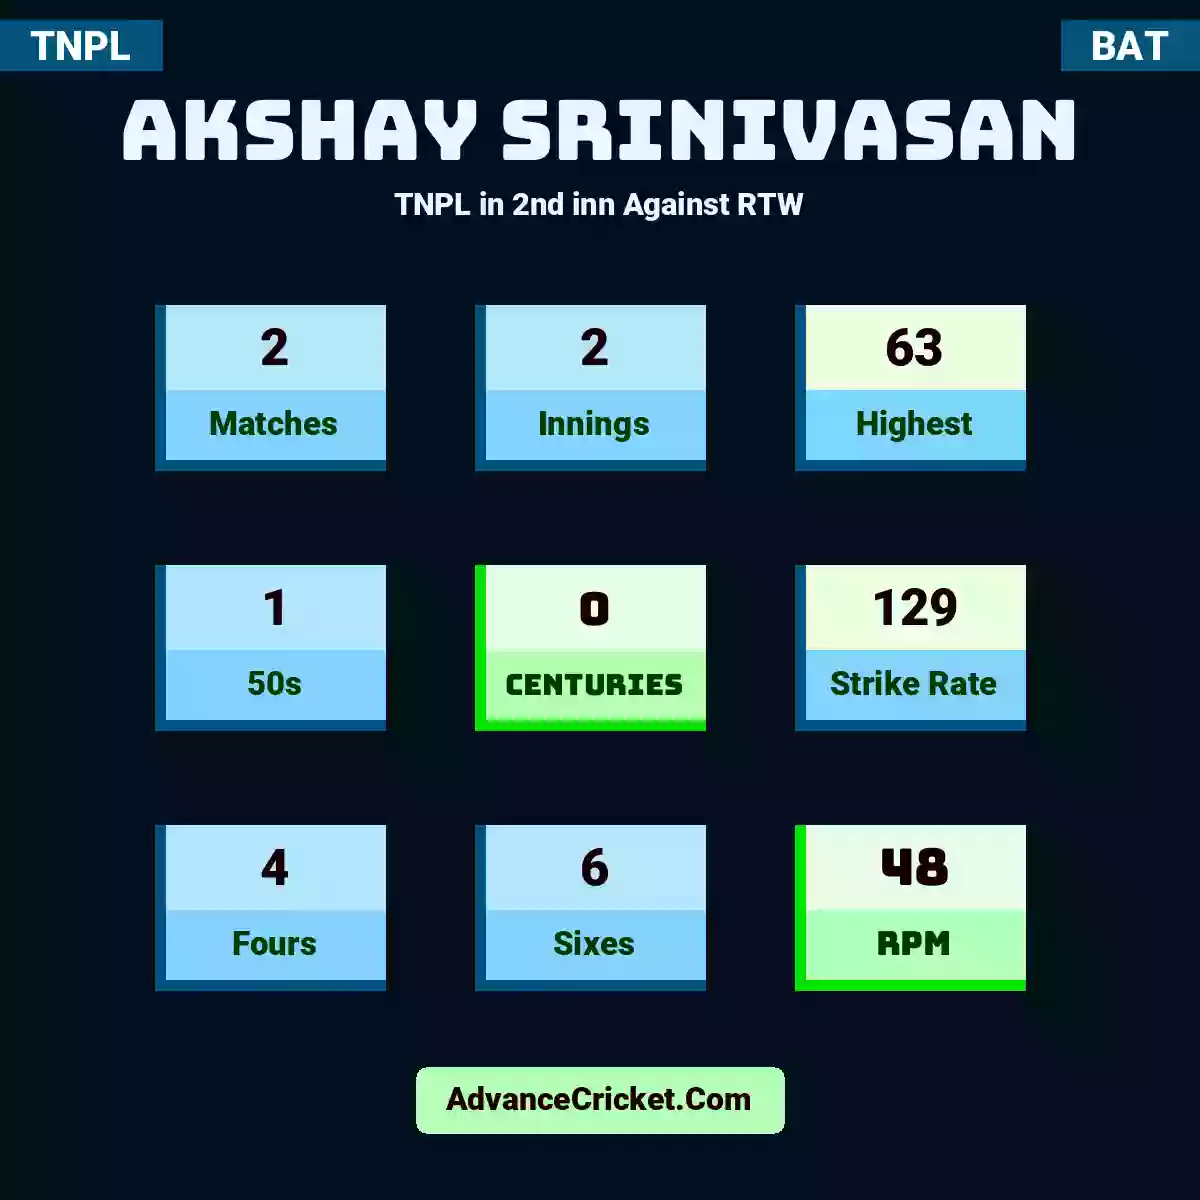 Akshay Srinivasan TNPL  in 2nd inn Against RTW, Akshay Srinivasan played 2 matches, scored 63 runs as highest, 1 half-centuries, and 0 centuries, with a strike rate of 129. A.Srinivasan hit 4 fours and 6 sixes, with an RPM of 48.